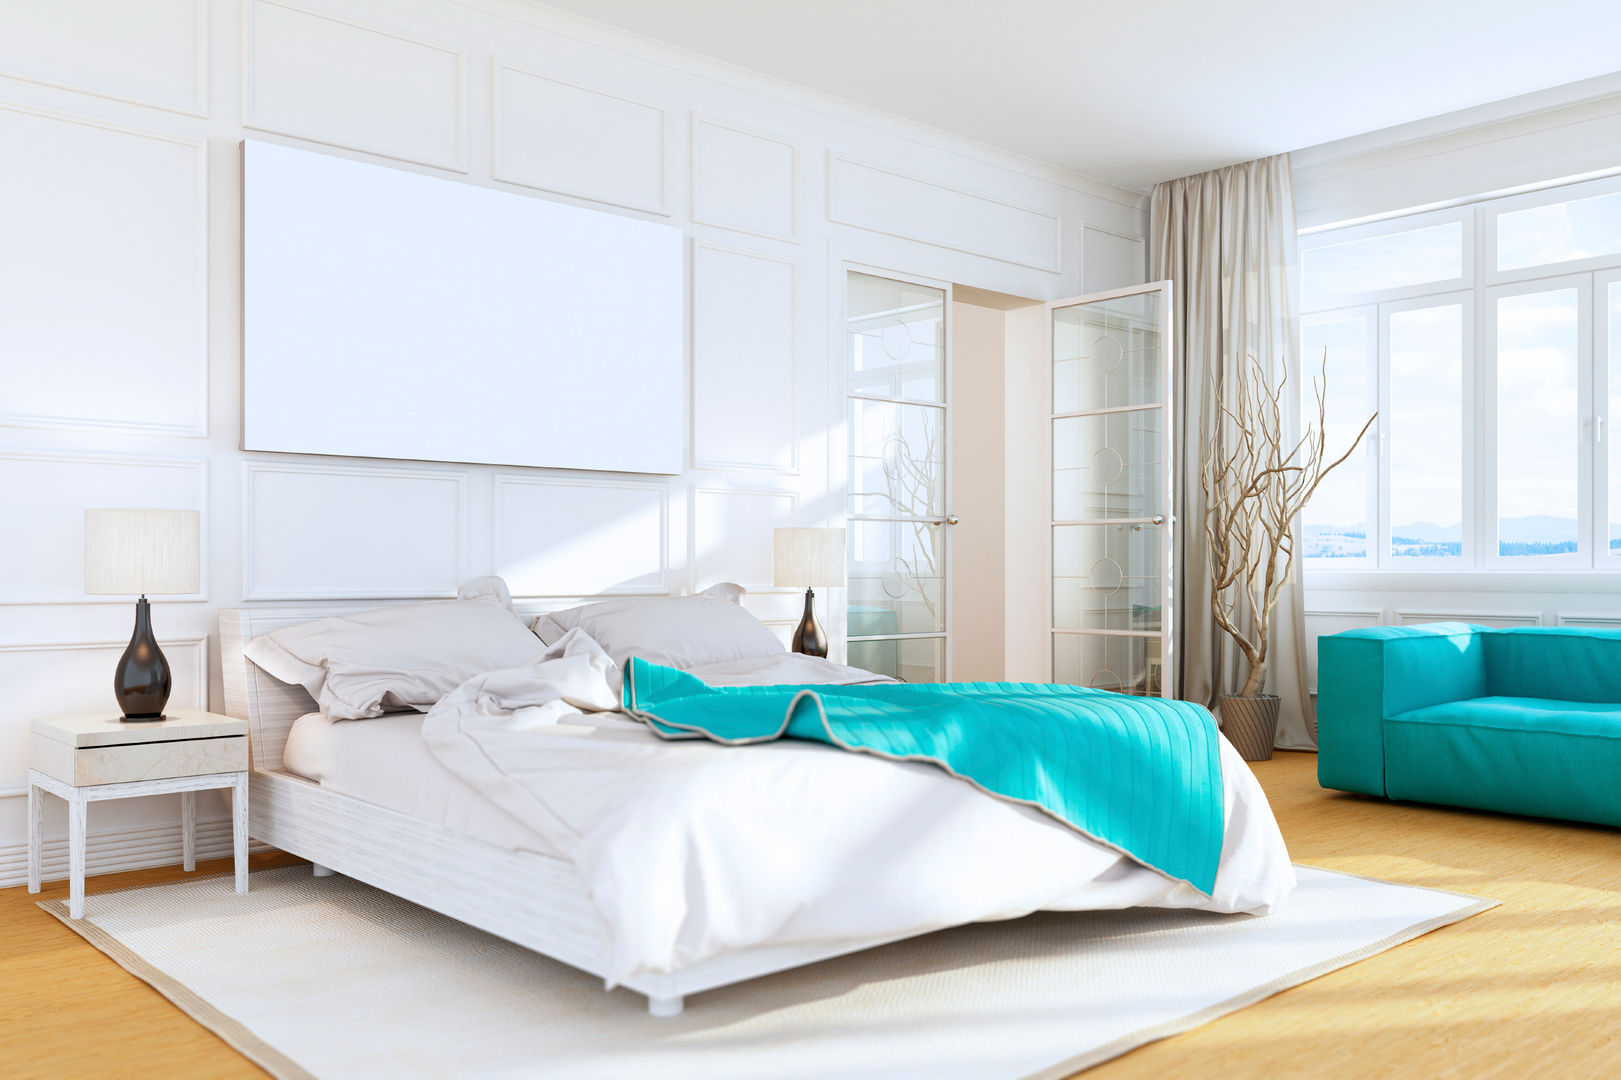 Beach House Bedroom Gracious Luxury Interiors Minimalistyczna sypialnia Torquoise,Blue,beach house,White,Bright,Pastel,Minimal,Pop of Color